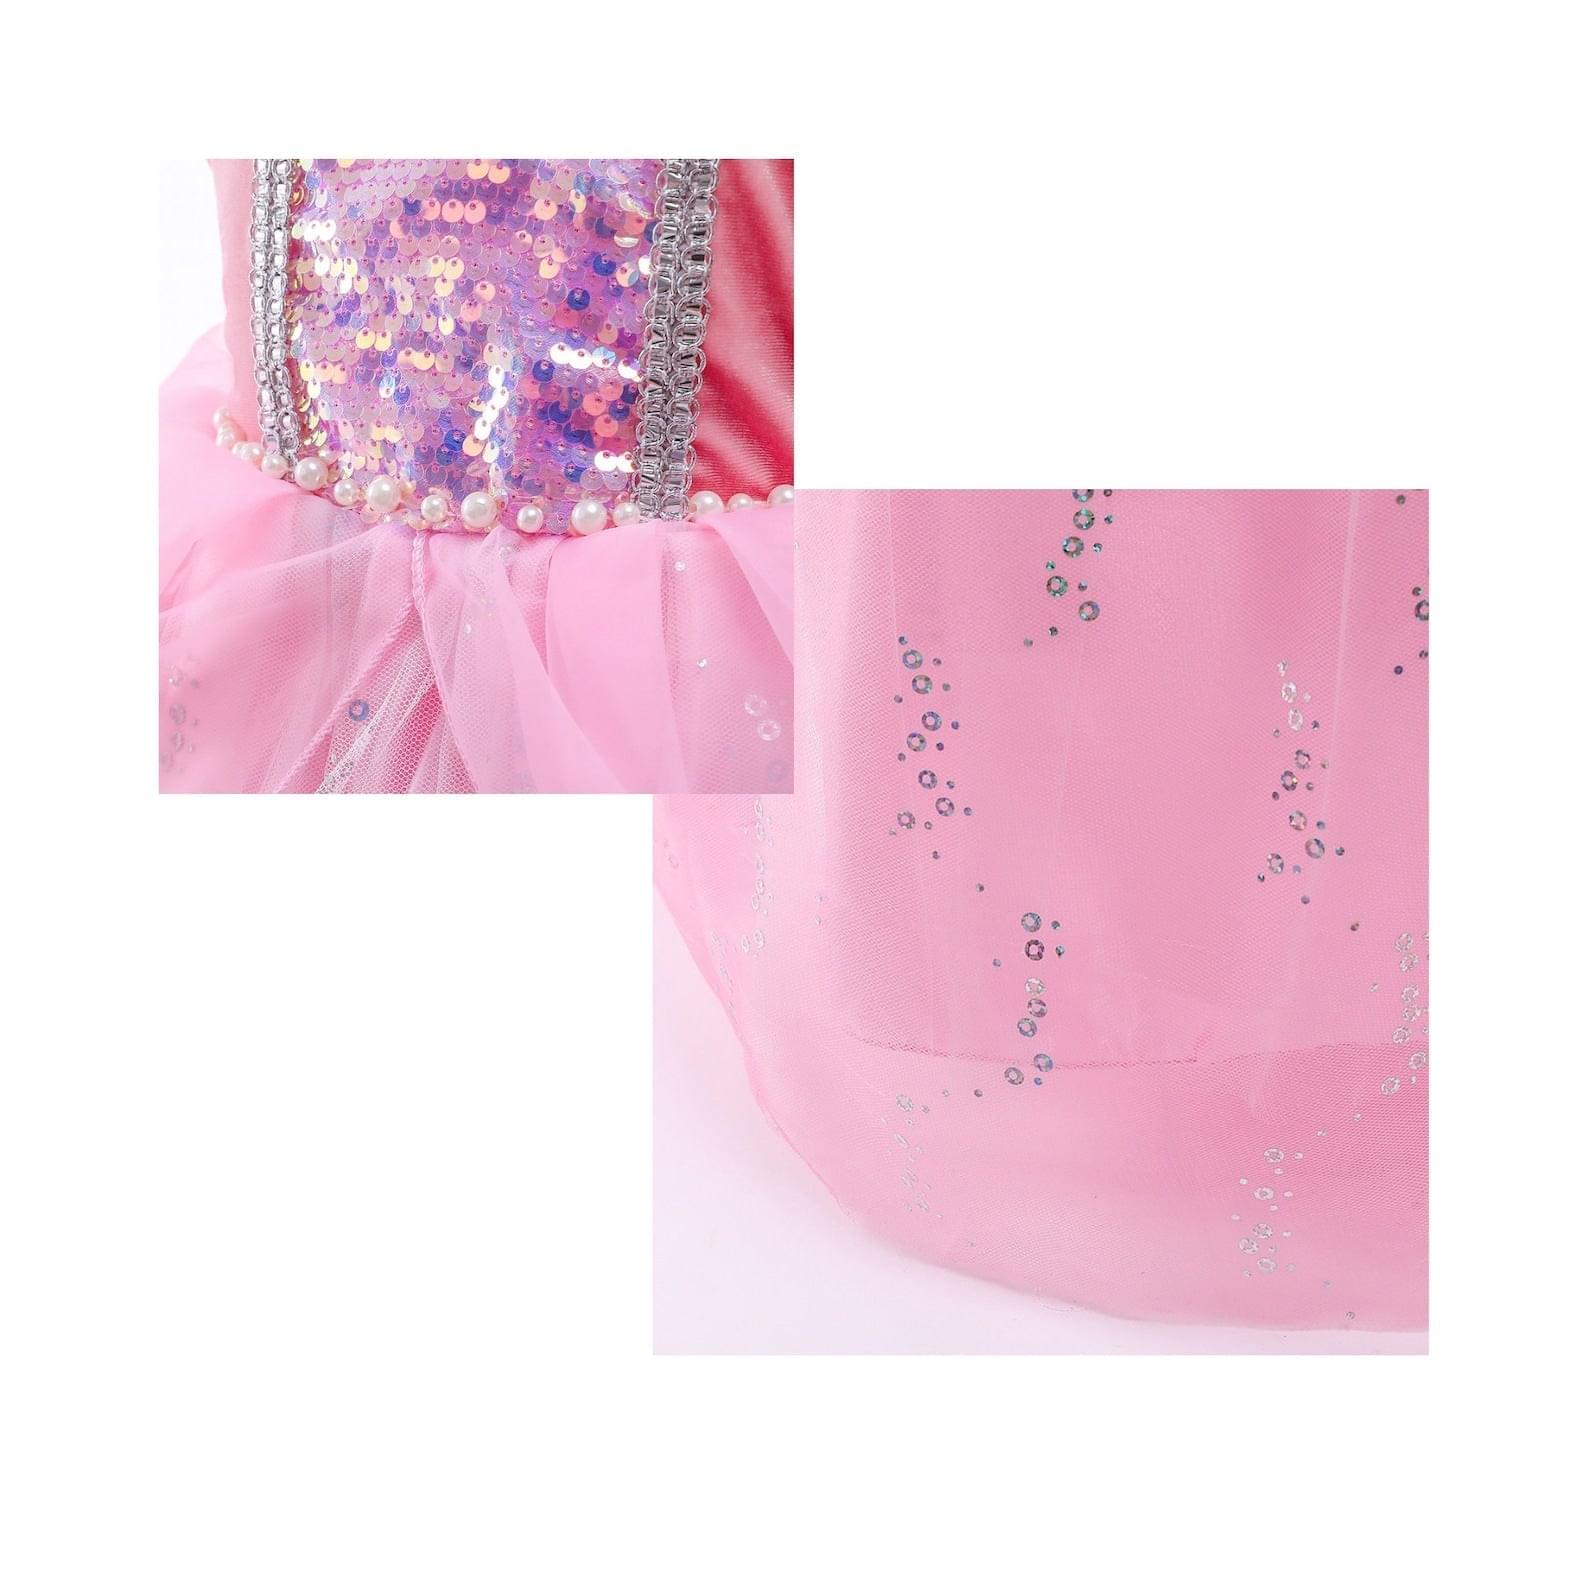 Disney-Inspired Pink Little Mermaid Ariel Dress with Birthday Accessories